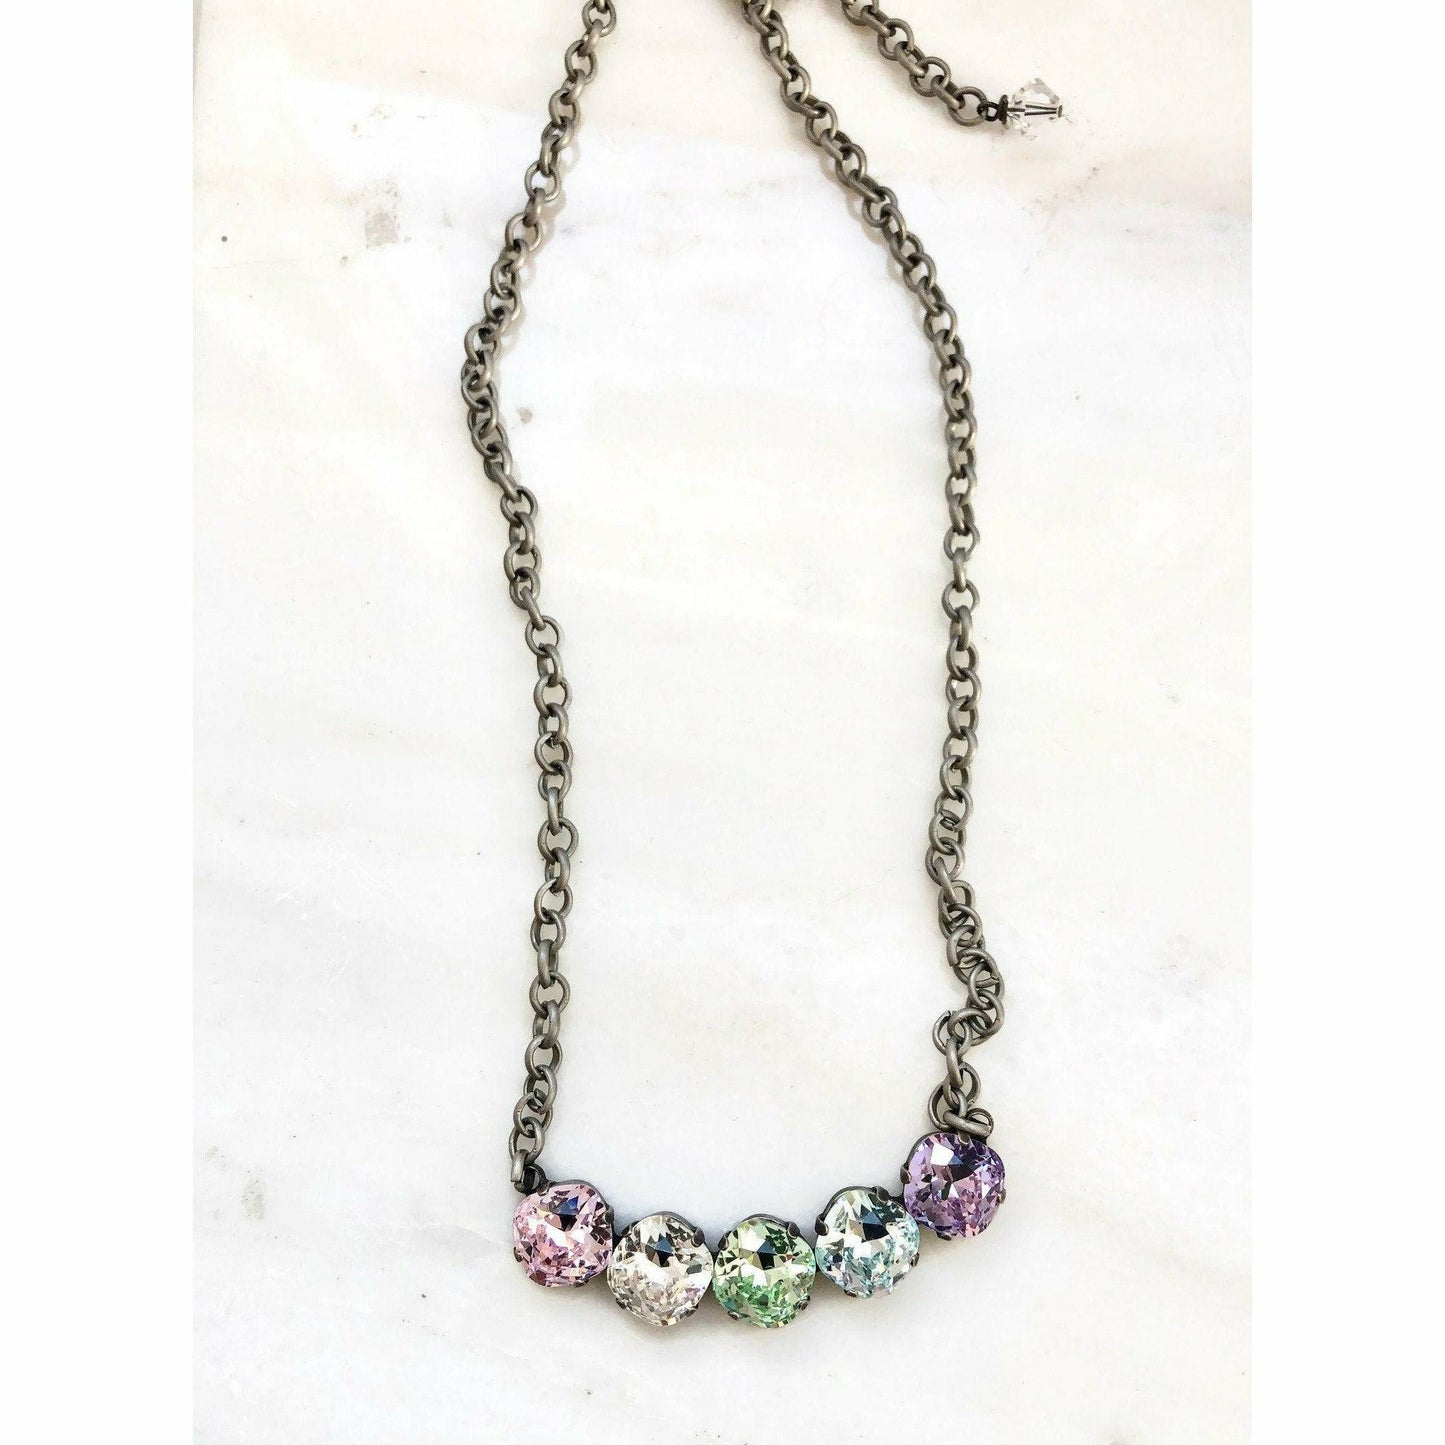 Rainbow pastel Swarovski Crystal necklace